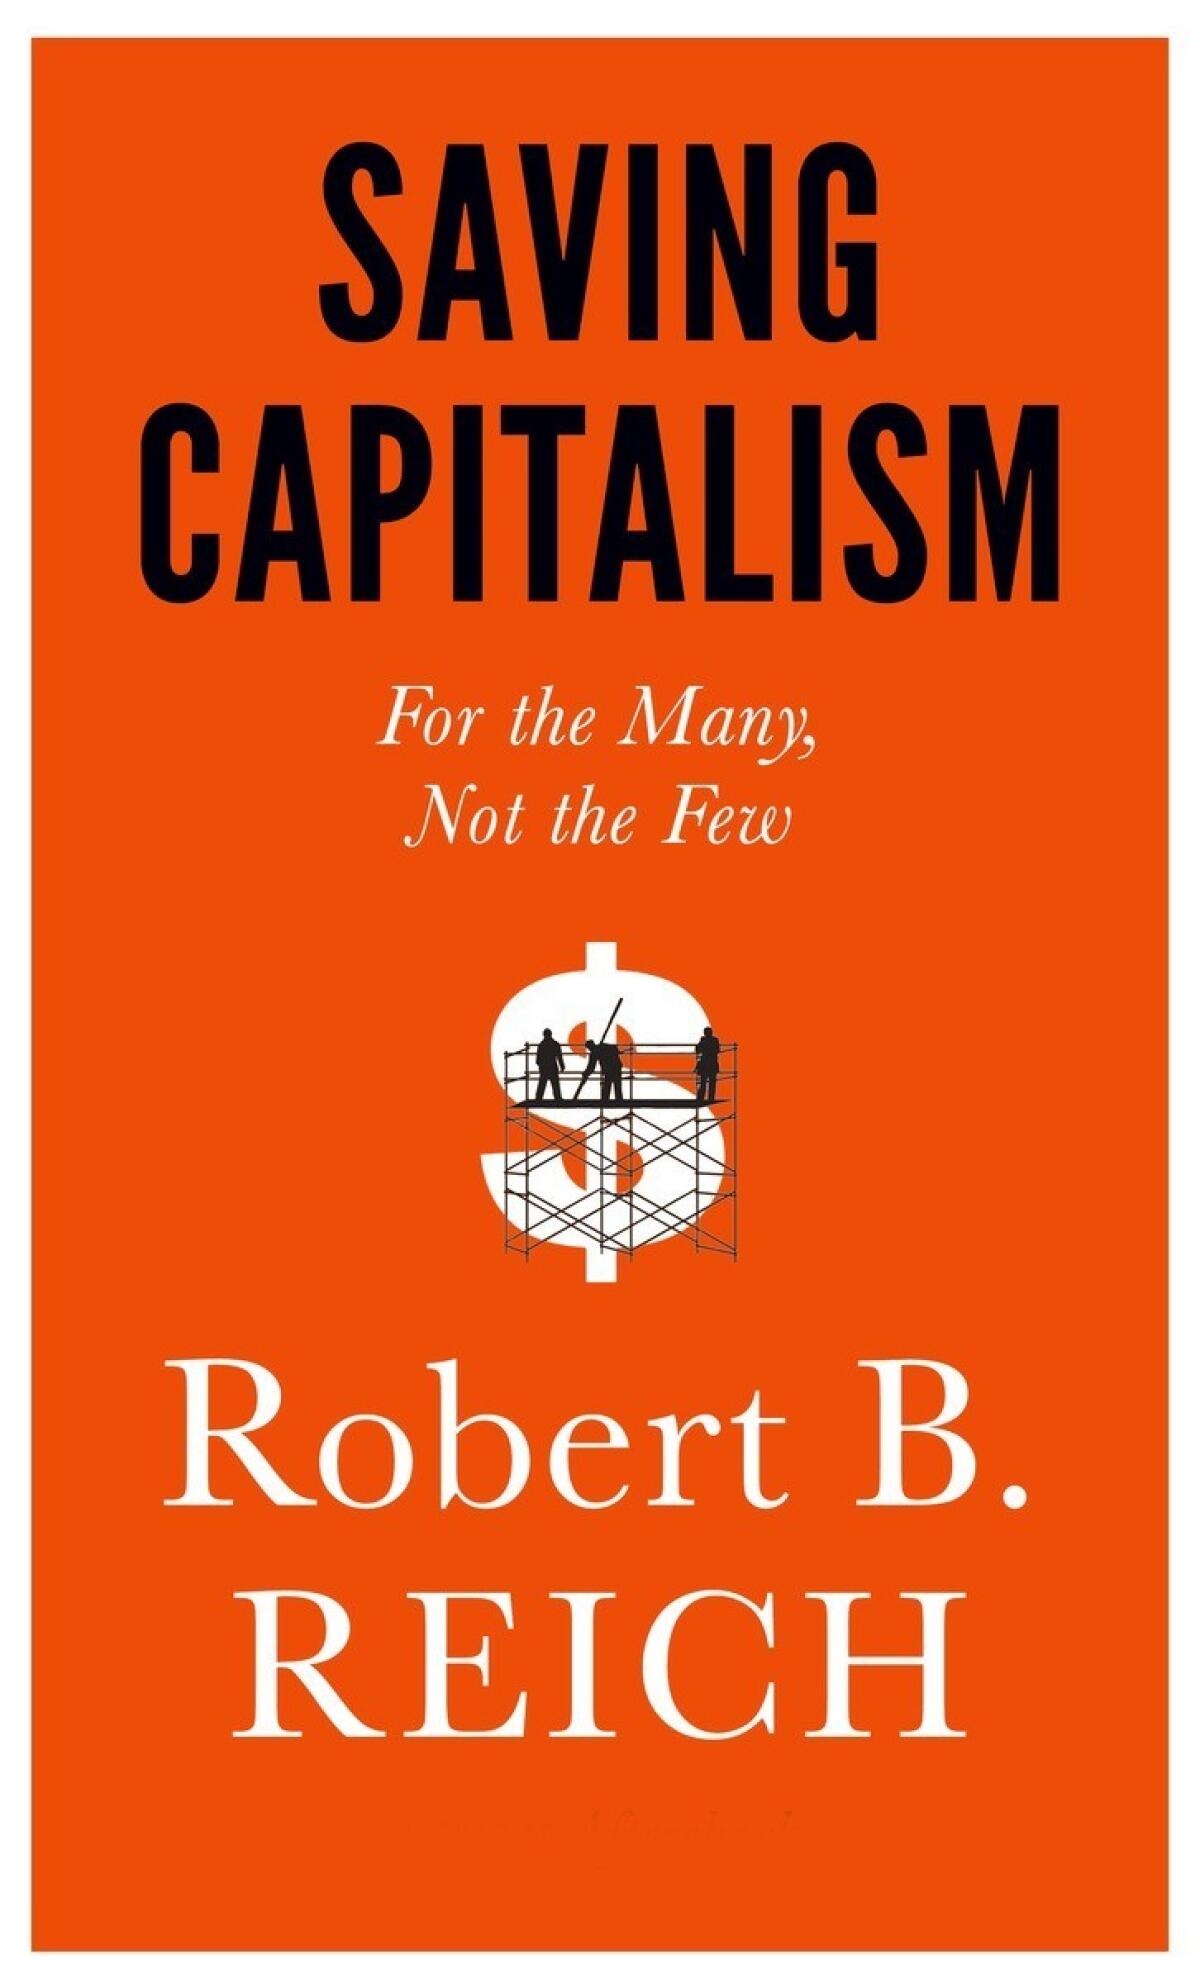 "Saving Capitalism" By Robert R. Reich